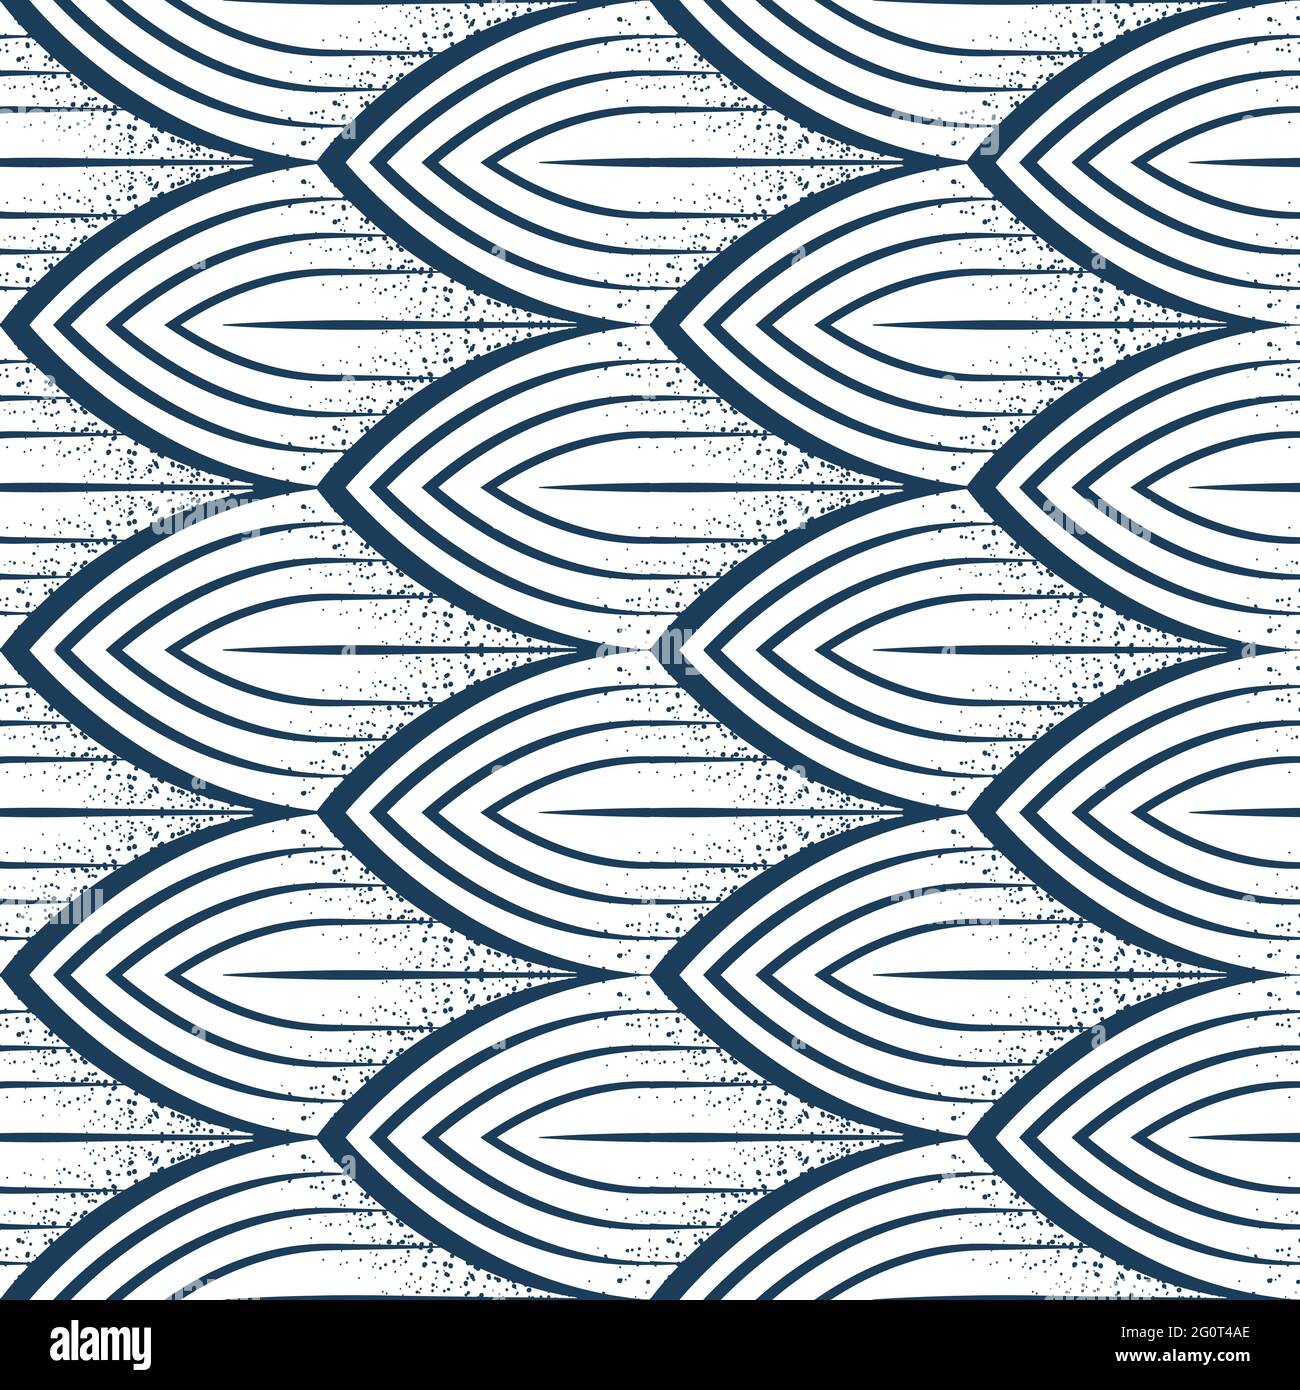 Fish scales vintage, engraving style seamless pattern. Mermaid or